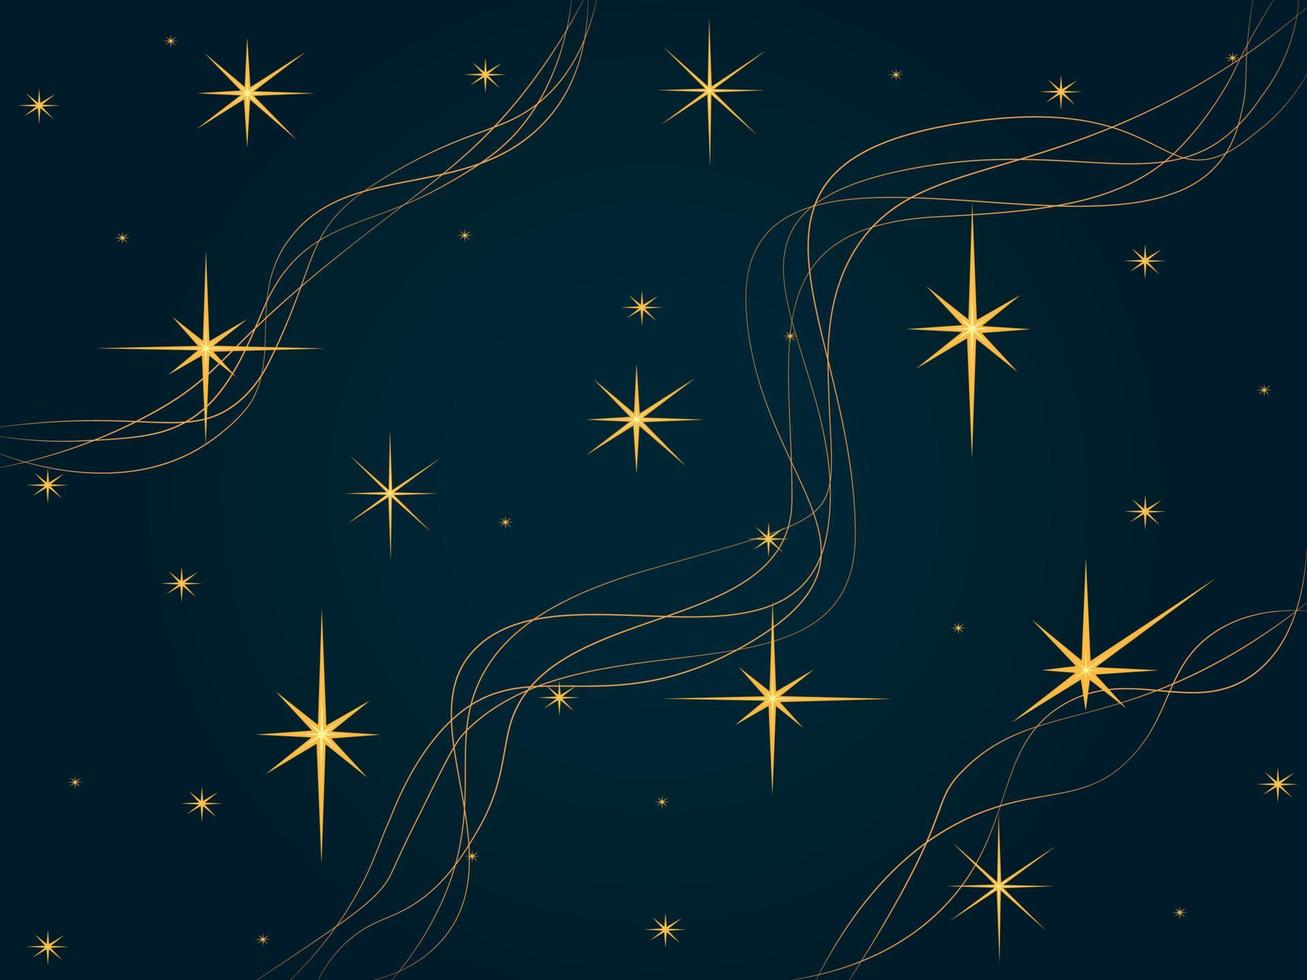 Abstract golden star sky background vector illustration